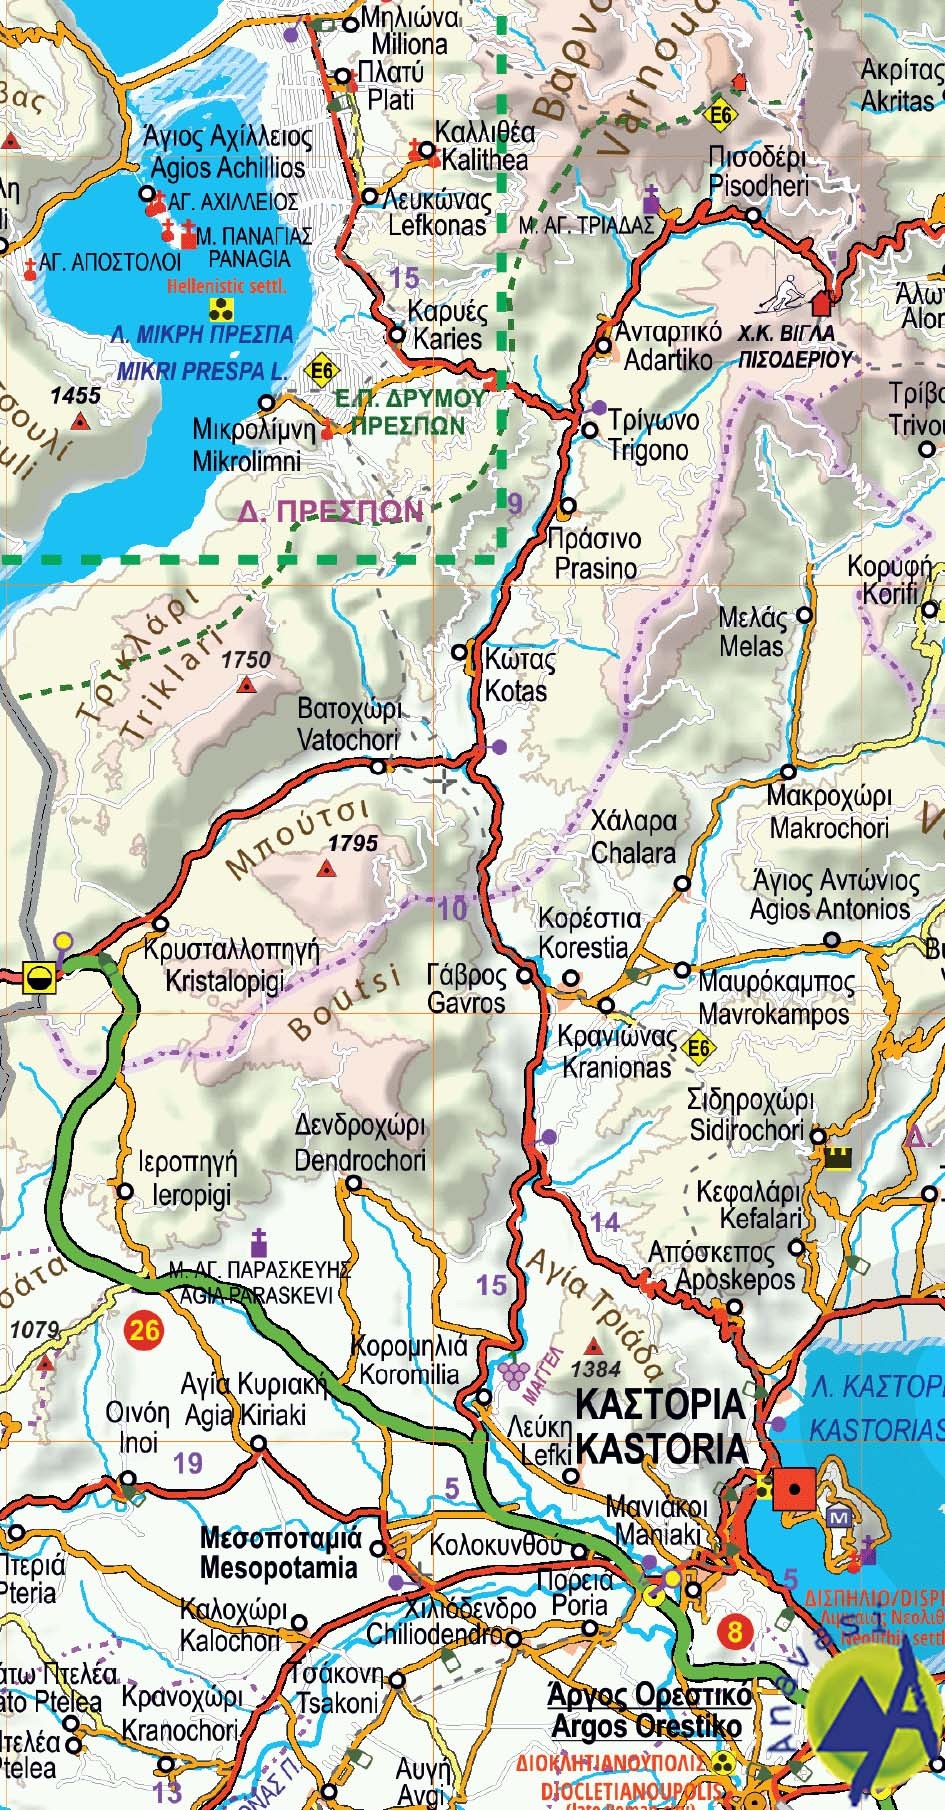 Macedonia • Road map 1:230 000